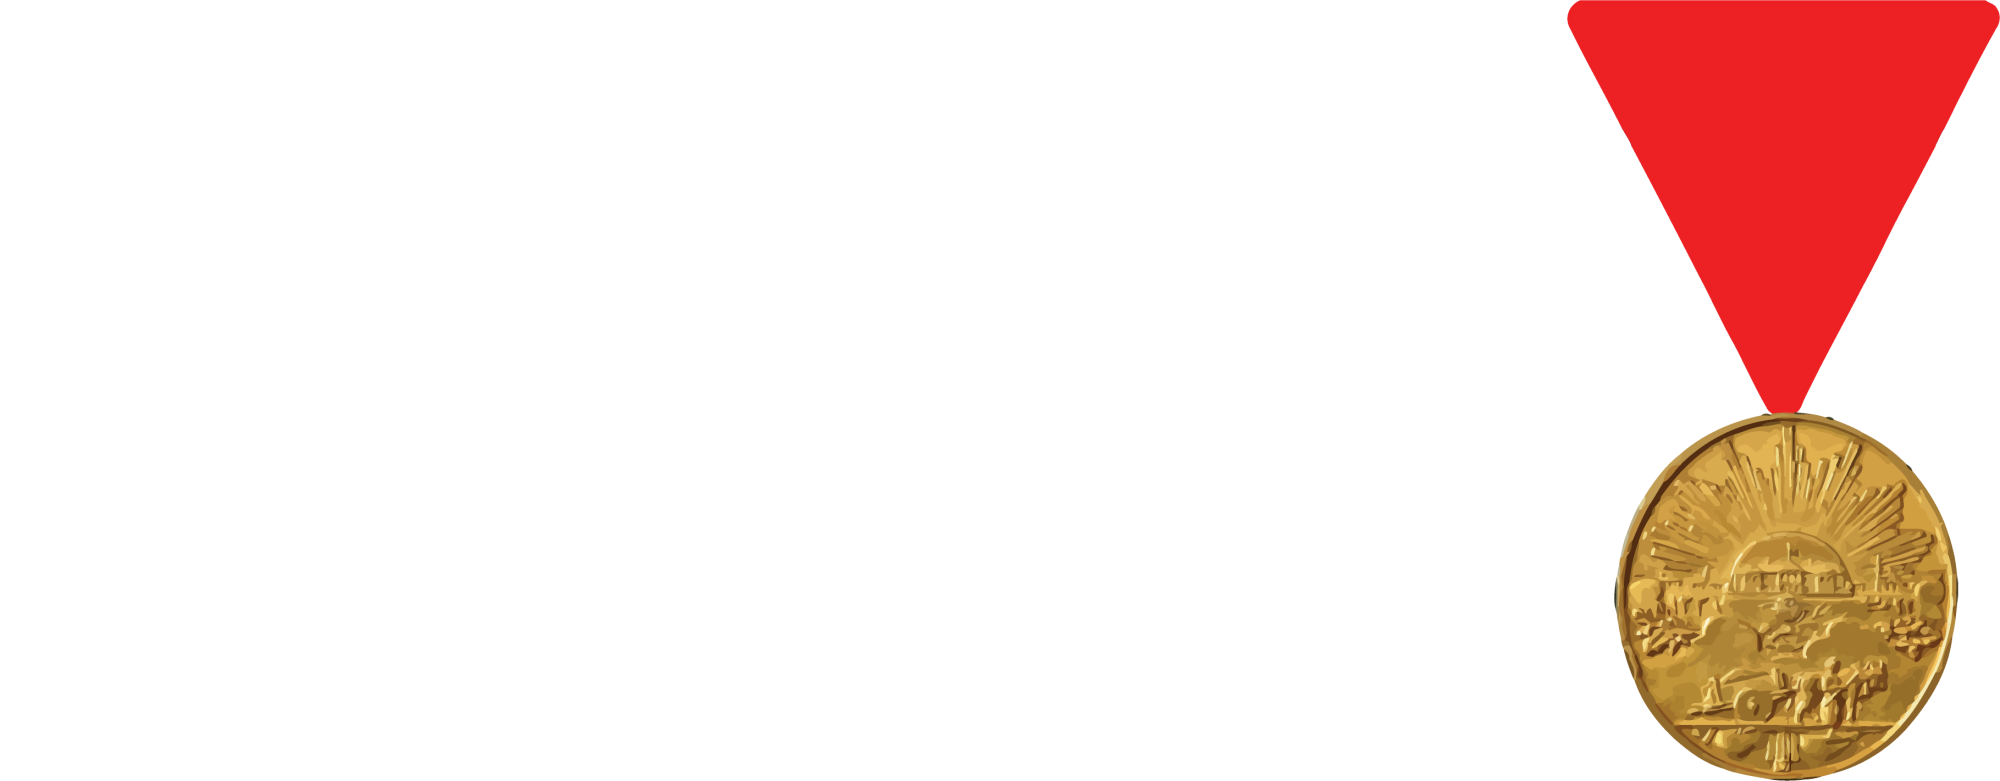 Kahramanmaras Metropolitan Municipality